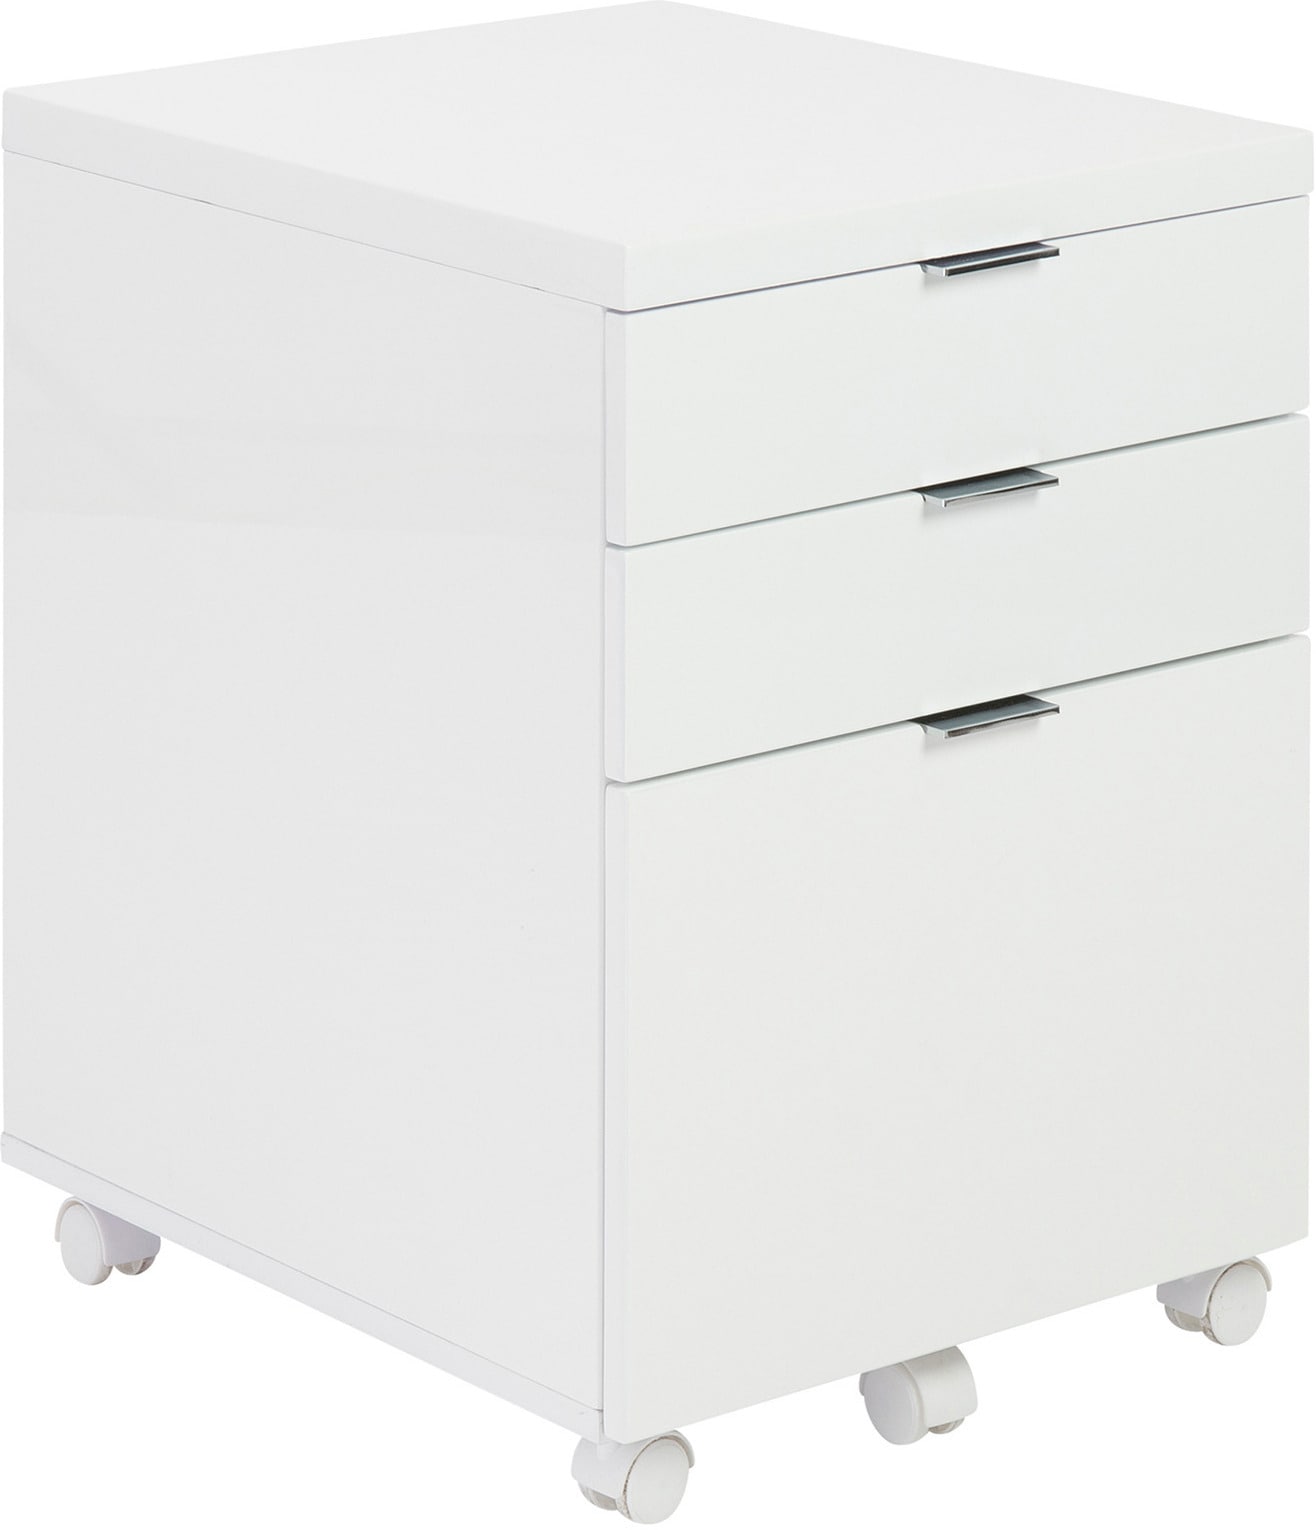 Zya 3 Drawer Filing Cabinet White | Value City Furniture